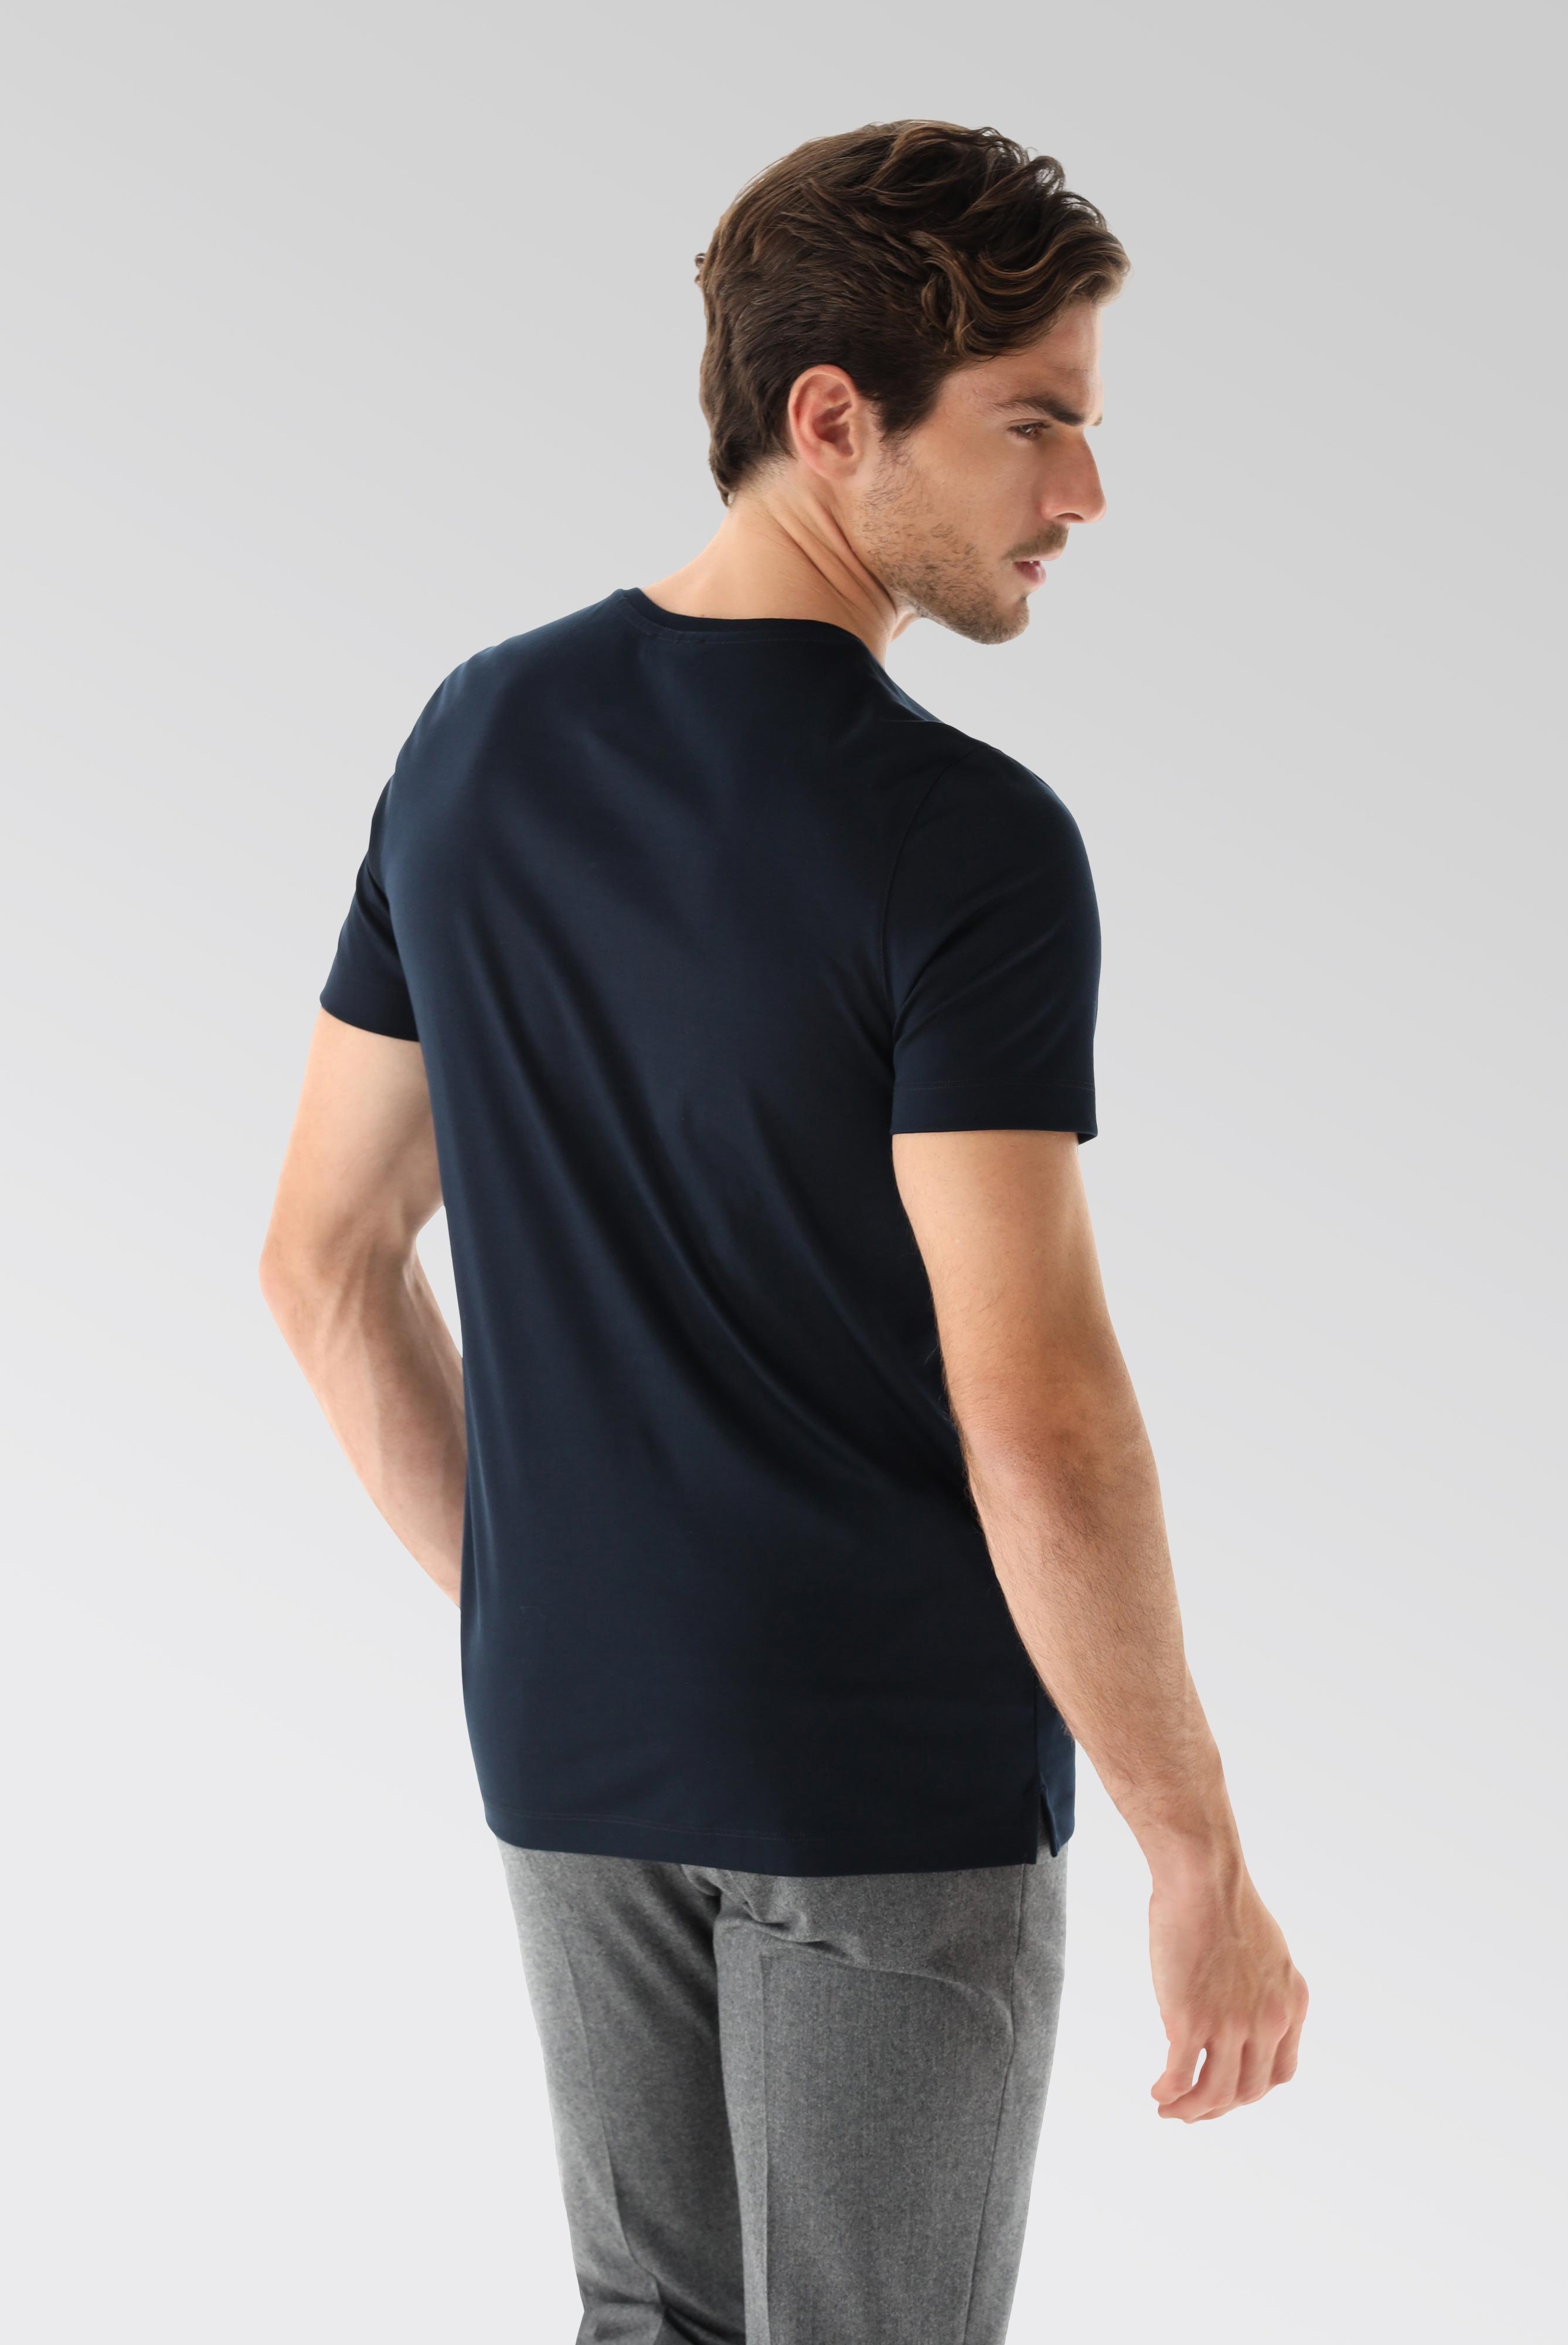 T-Shirts+Swiss Cotton Jersey V-Neck T-Shirt+20.1715.UX.180031.790.XL